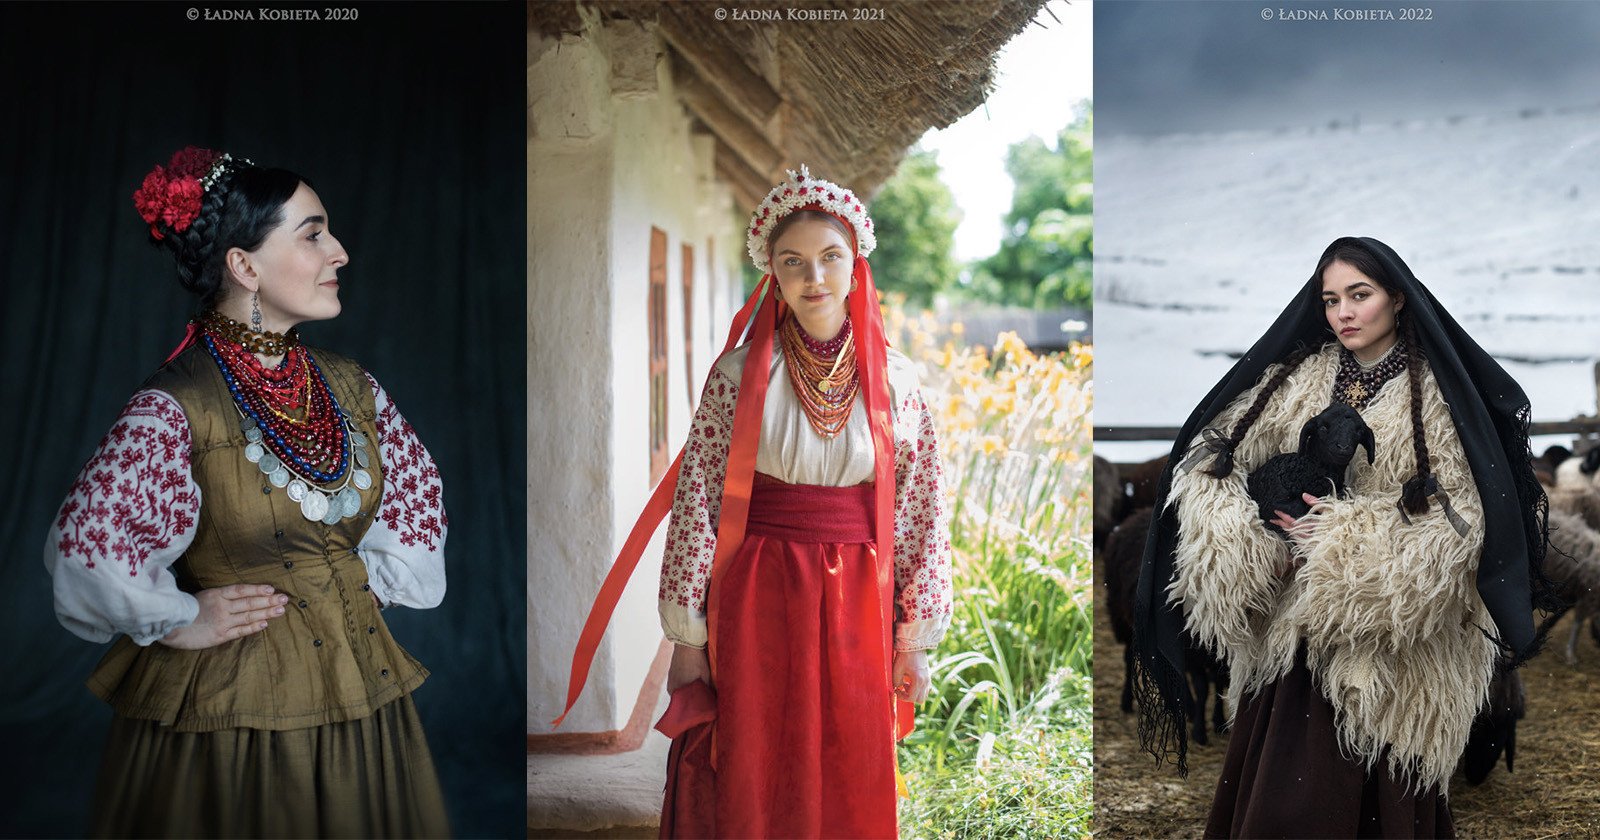 Ukrainian Photographer’s Ethnic Photos Represent What’s at Stake